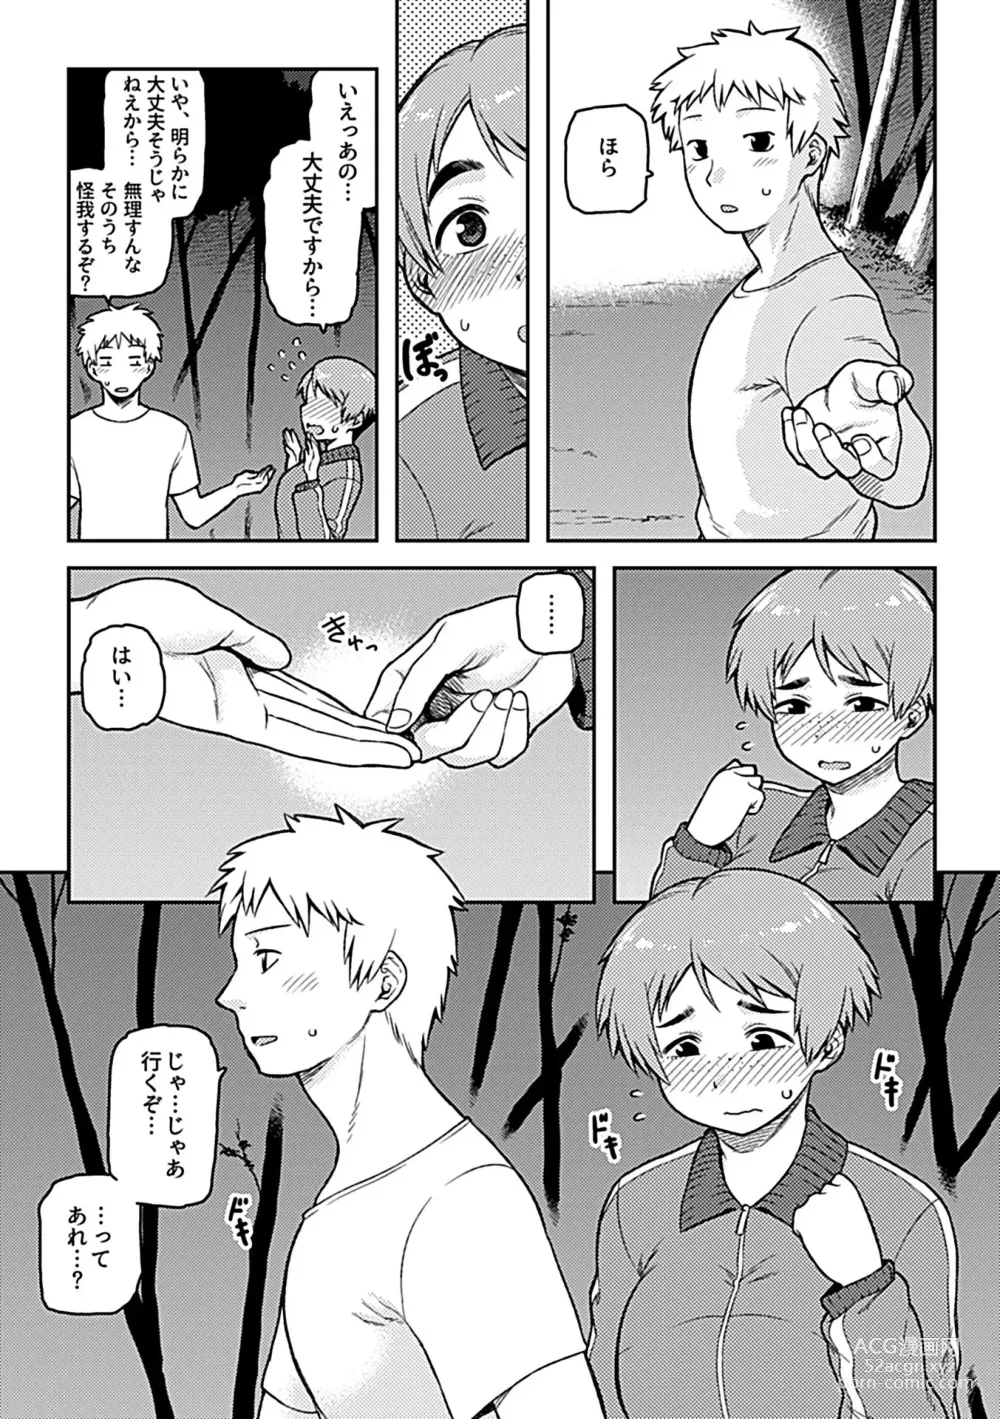 Page 9 of manga Aibiki